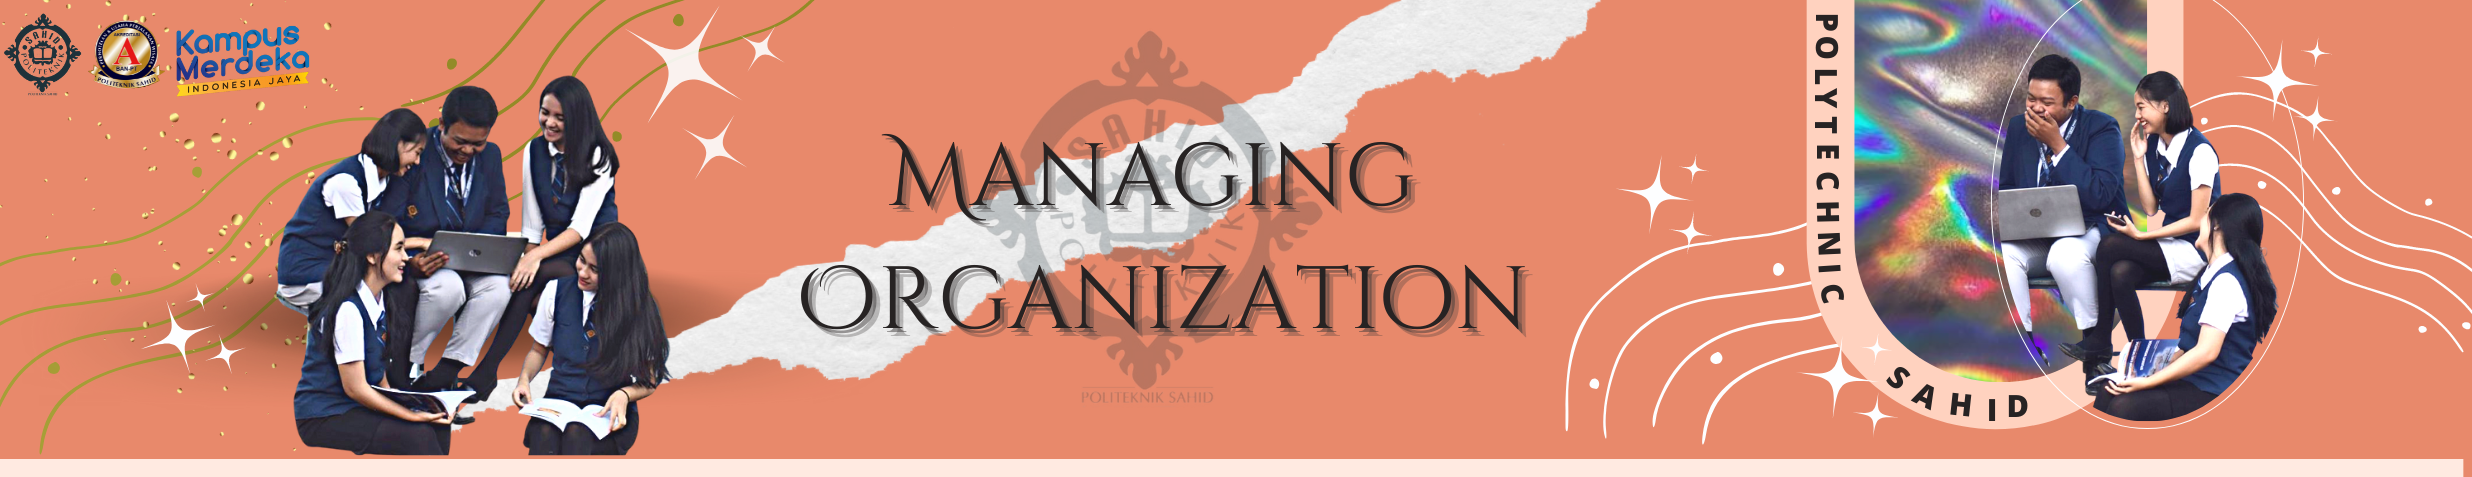 Managing Organization